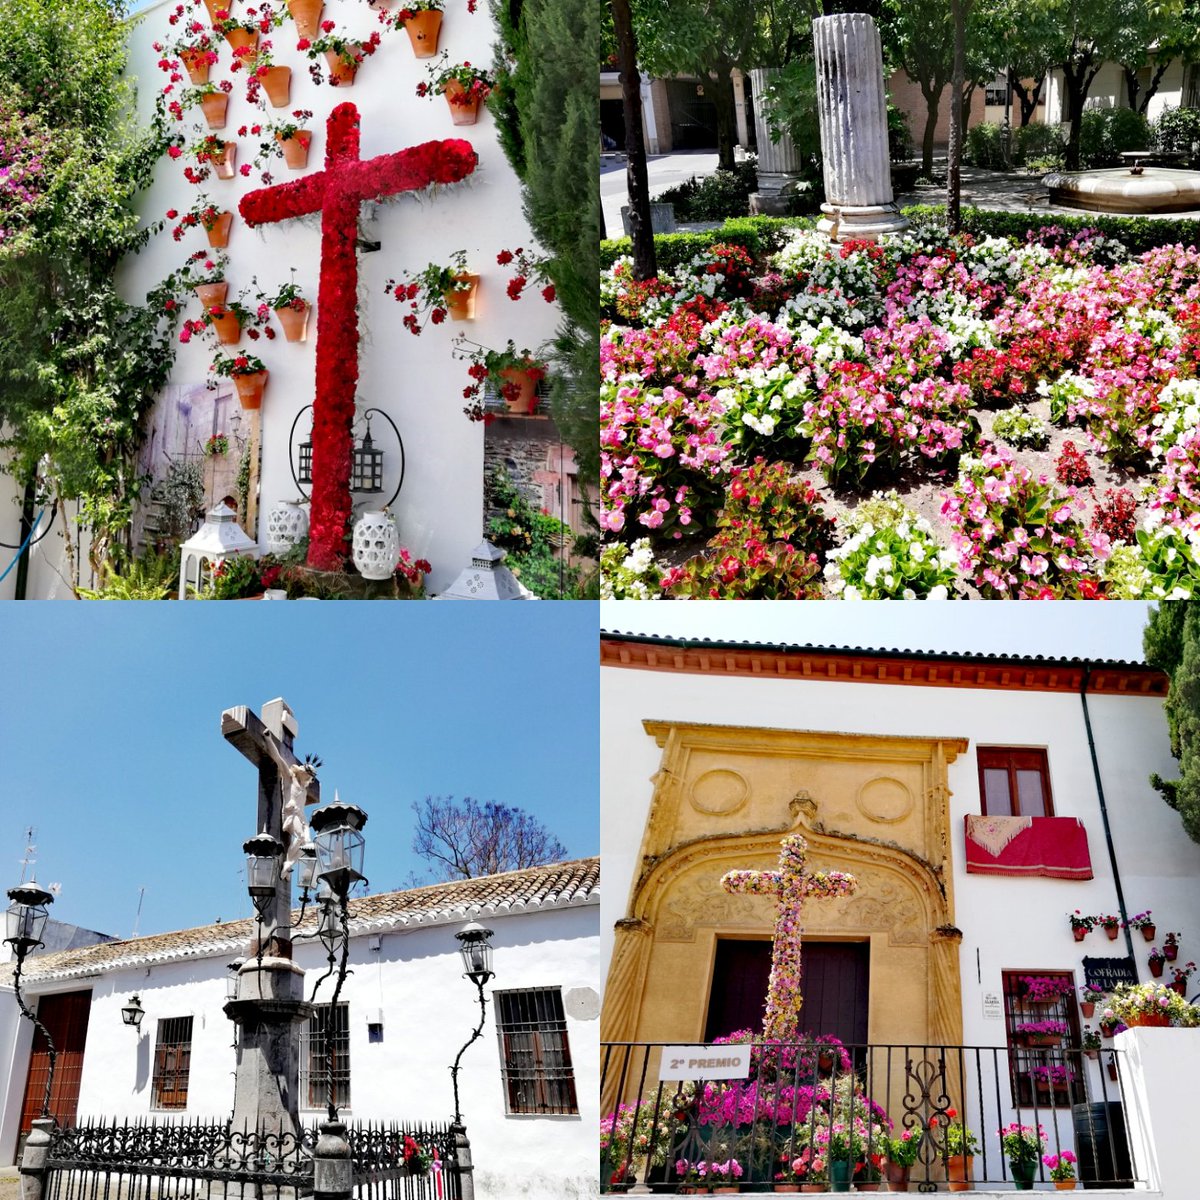 🌹Cruces de Mayo en Córdoba 🌹 #Sedellanaturaleza #mayoencordoba #crucesdecordoba #crucesdemayo #Cordoba #cultura #folclore #tradicion